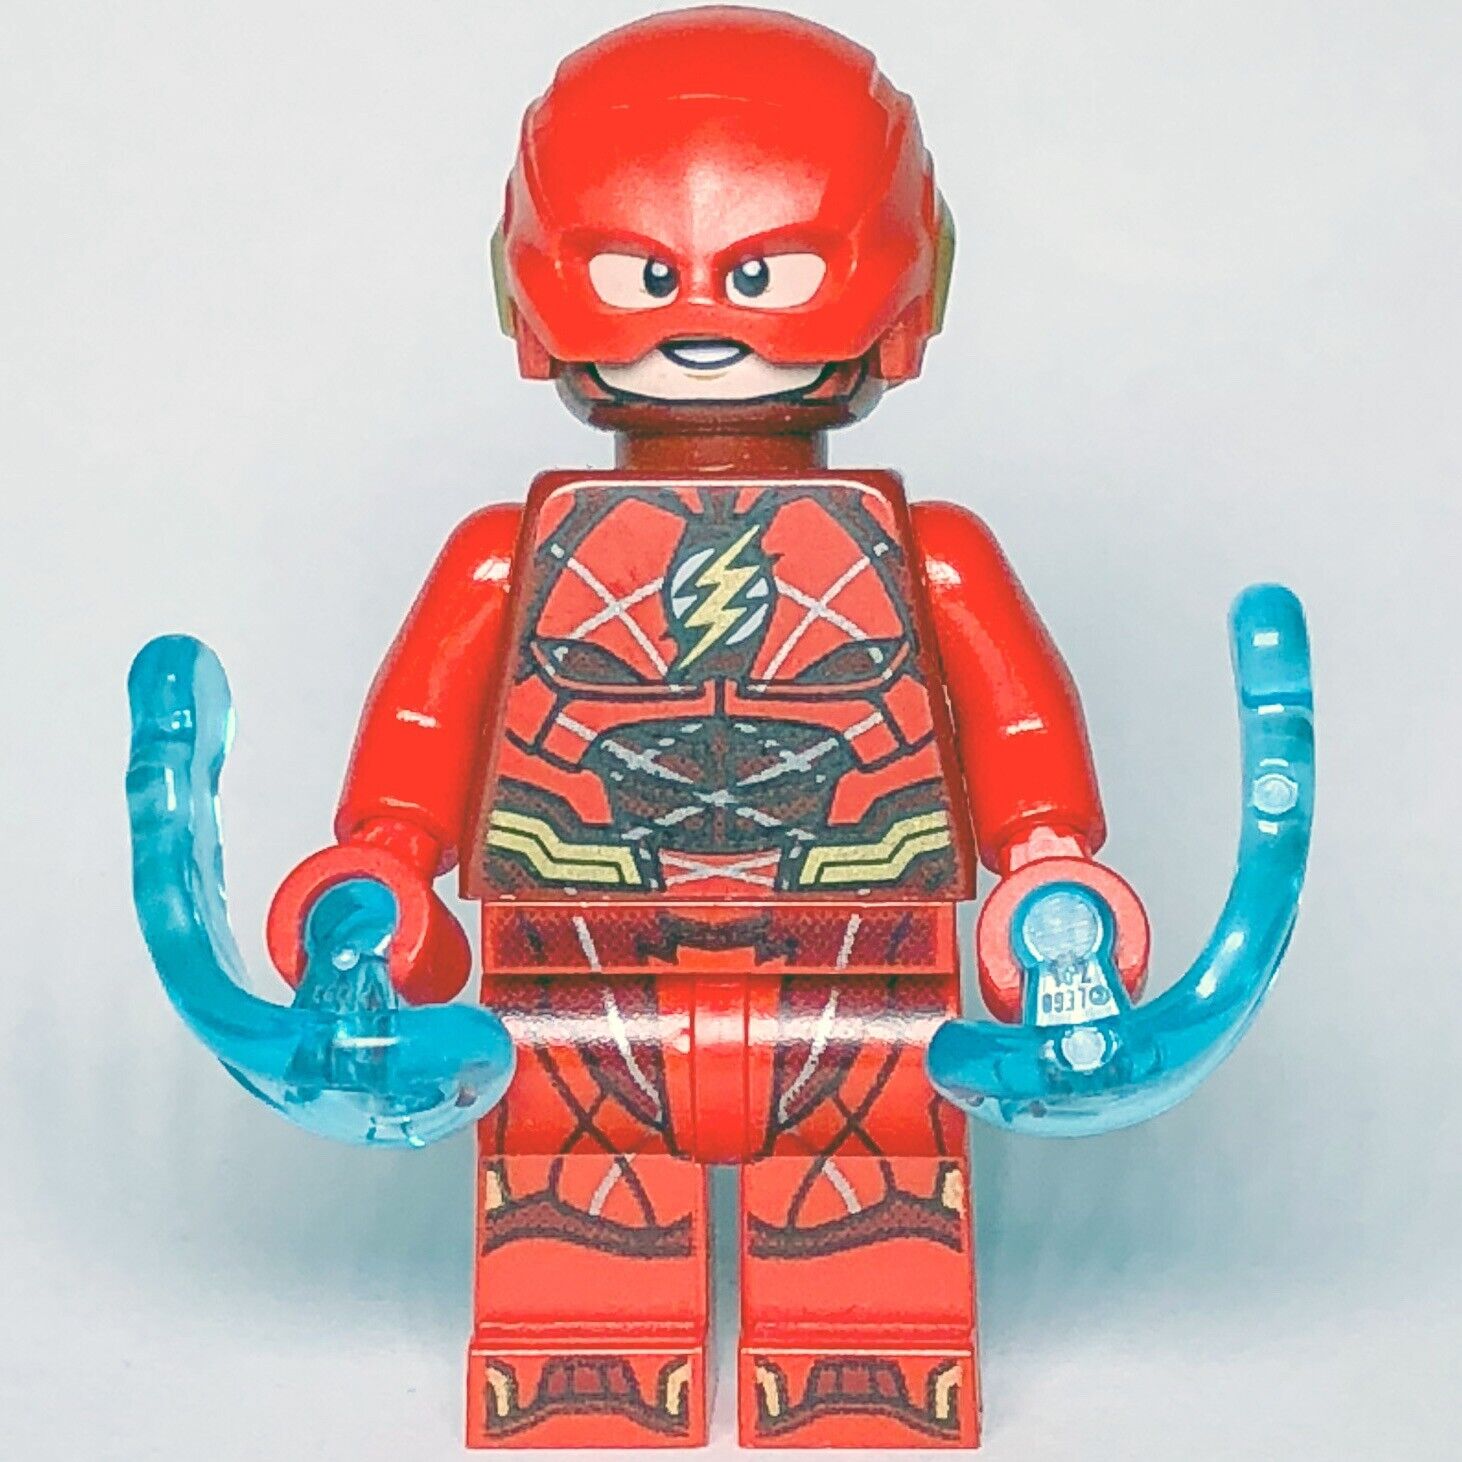 LEGO DC Super Heroes The Flash Minifigure Barry Allen Justice League 76086 sh438